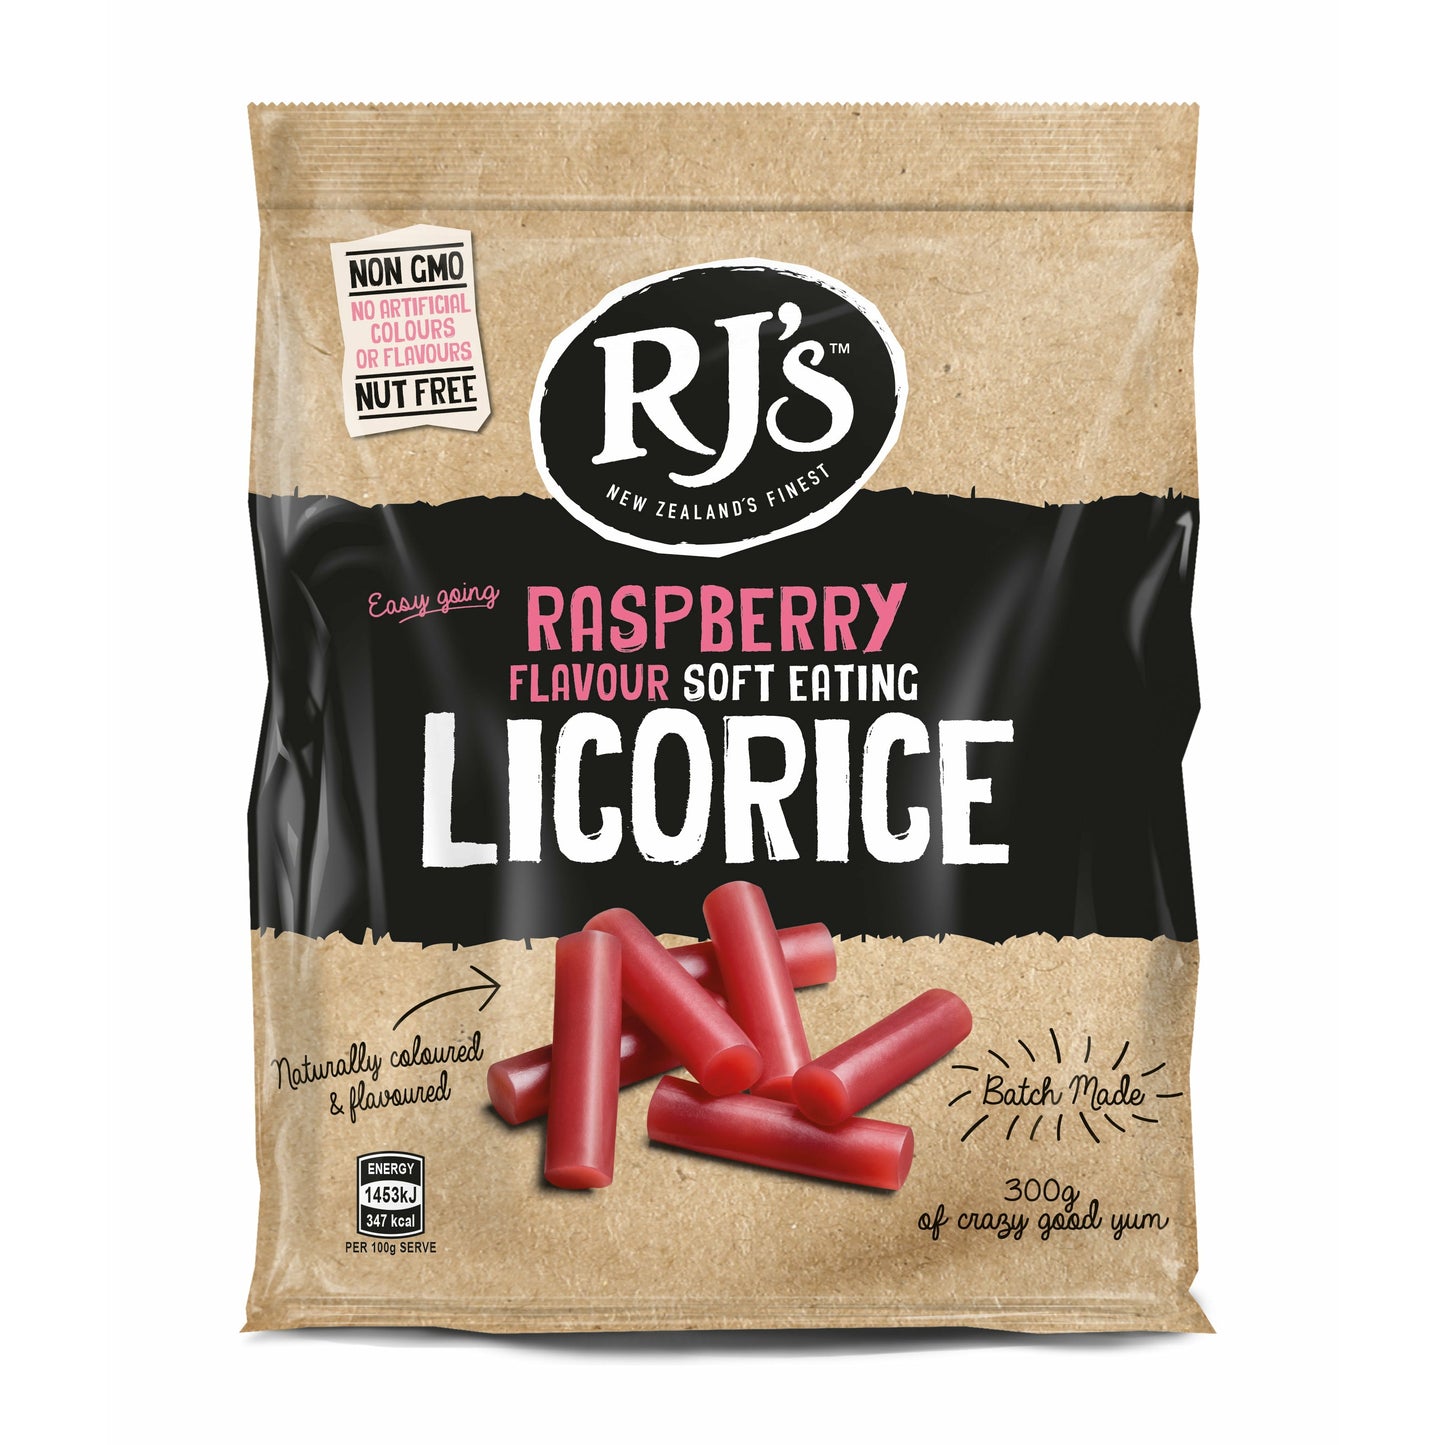 RJs LICORICE Natural Soft Eating Licorice Raspb Size - 12x300g